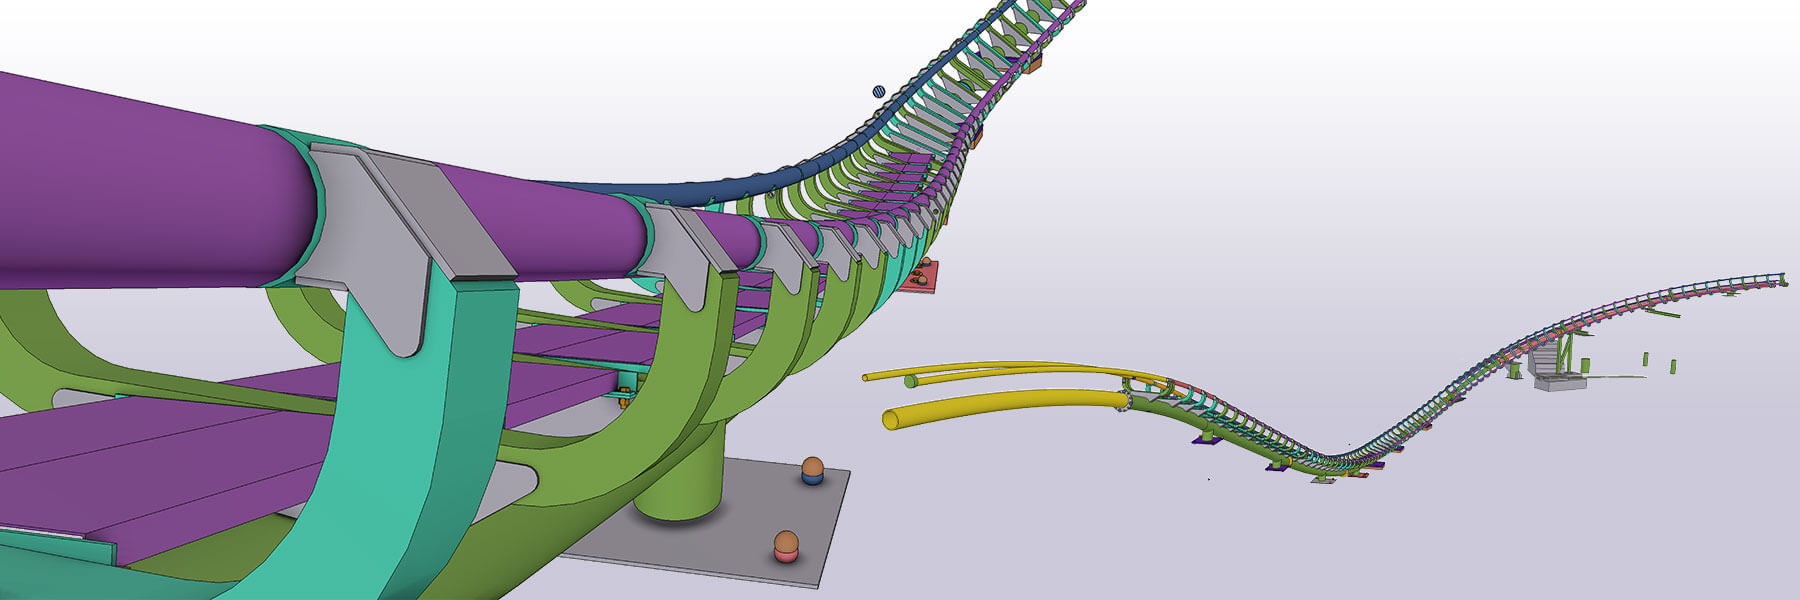 Taziker 3D Tekla model of the Big One rollercoaster.